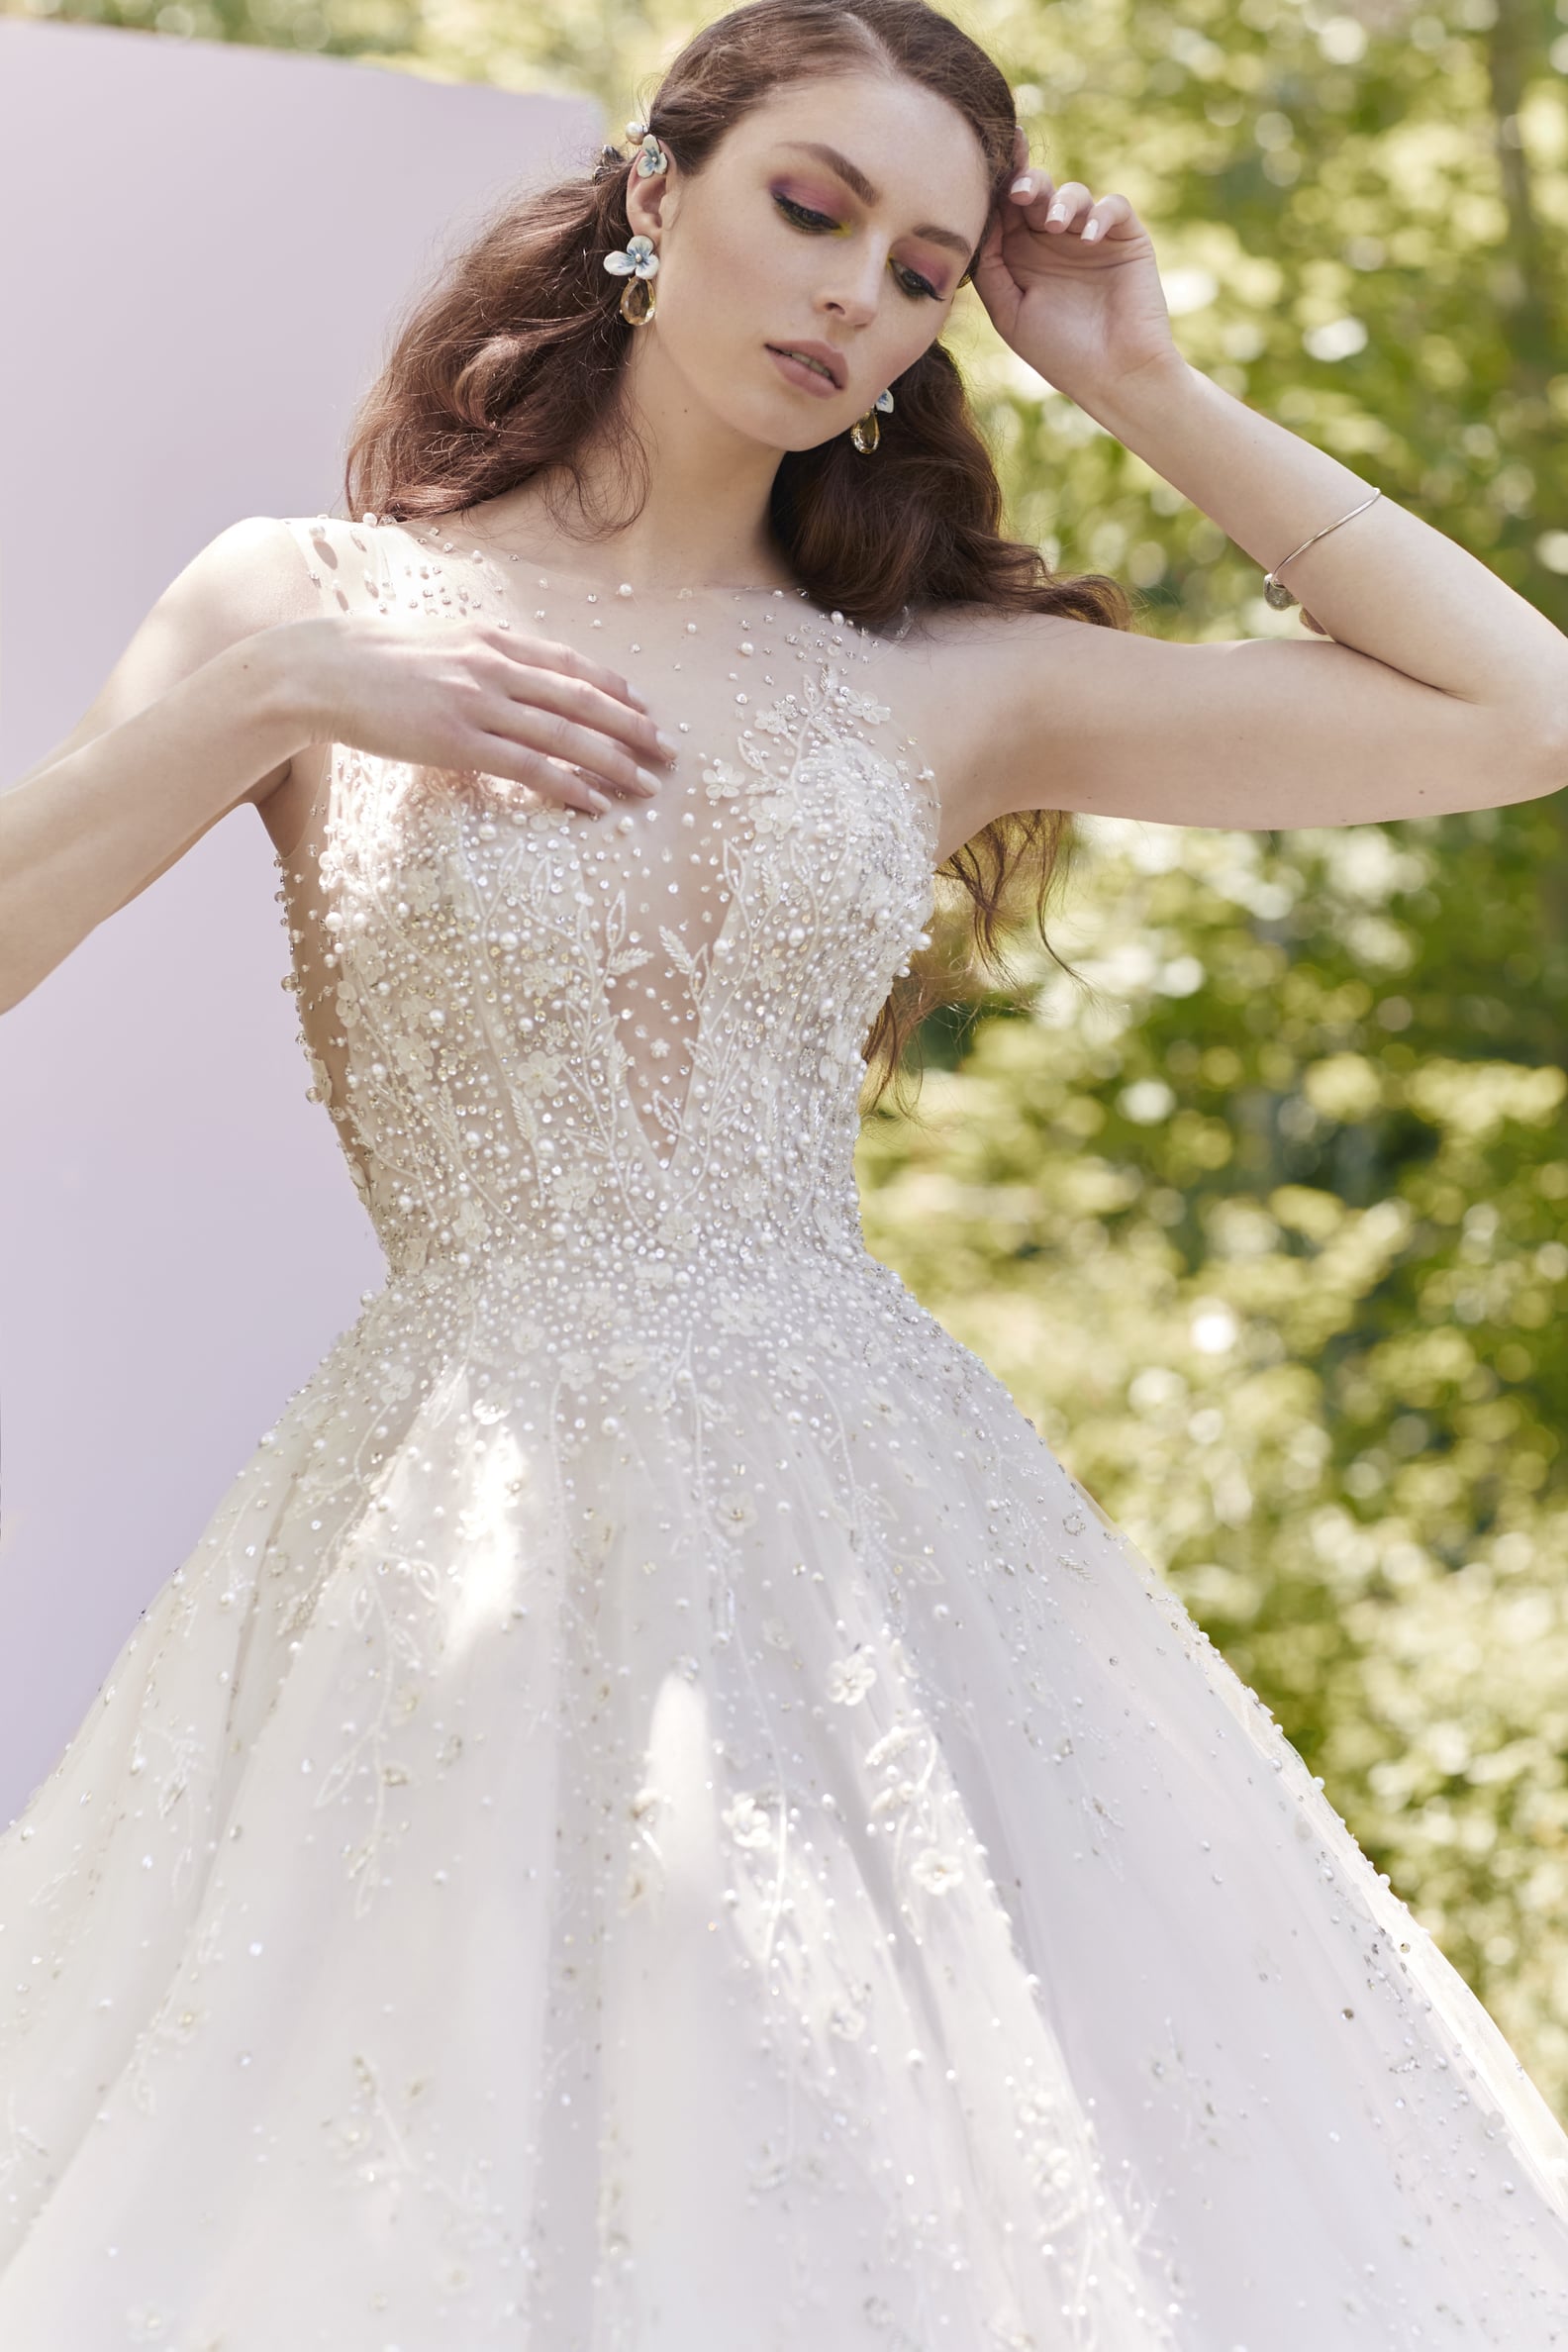 The 6 Biggest Wedding Dress Trends For 2021 Brides to Know | POPSUGAR ...